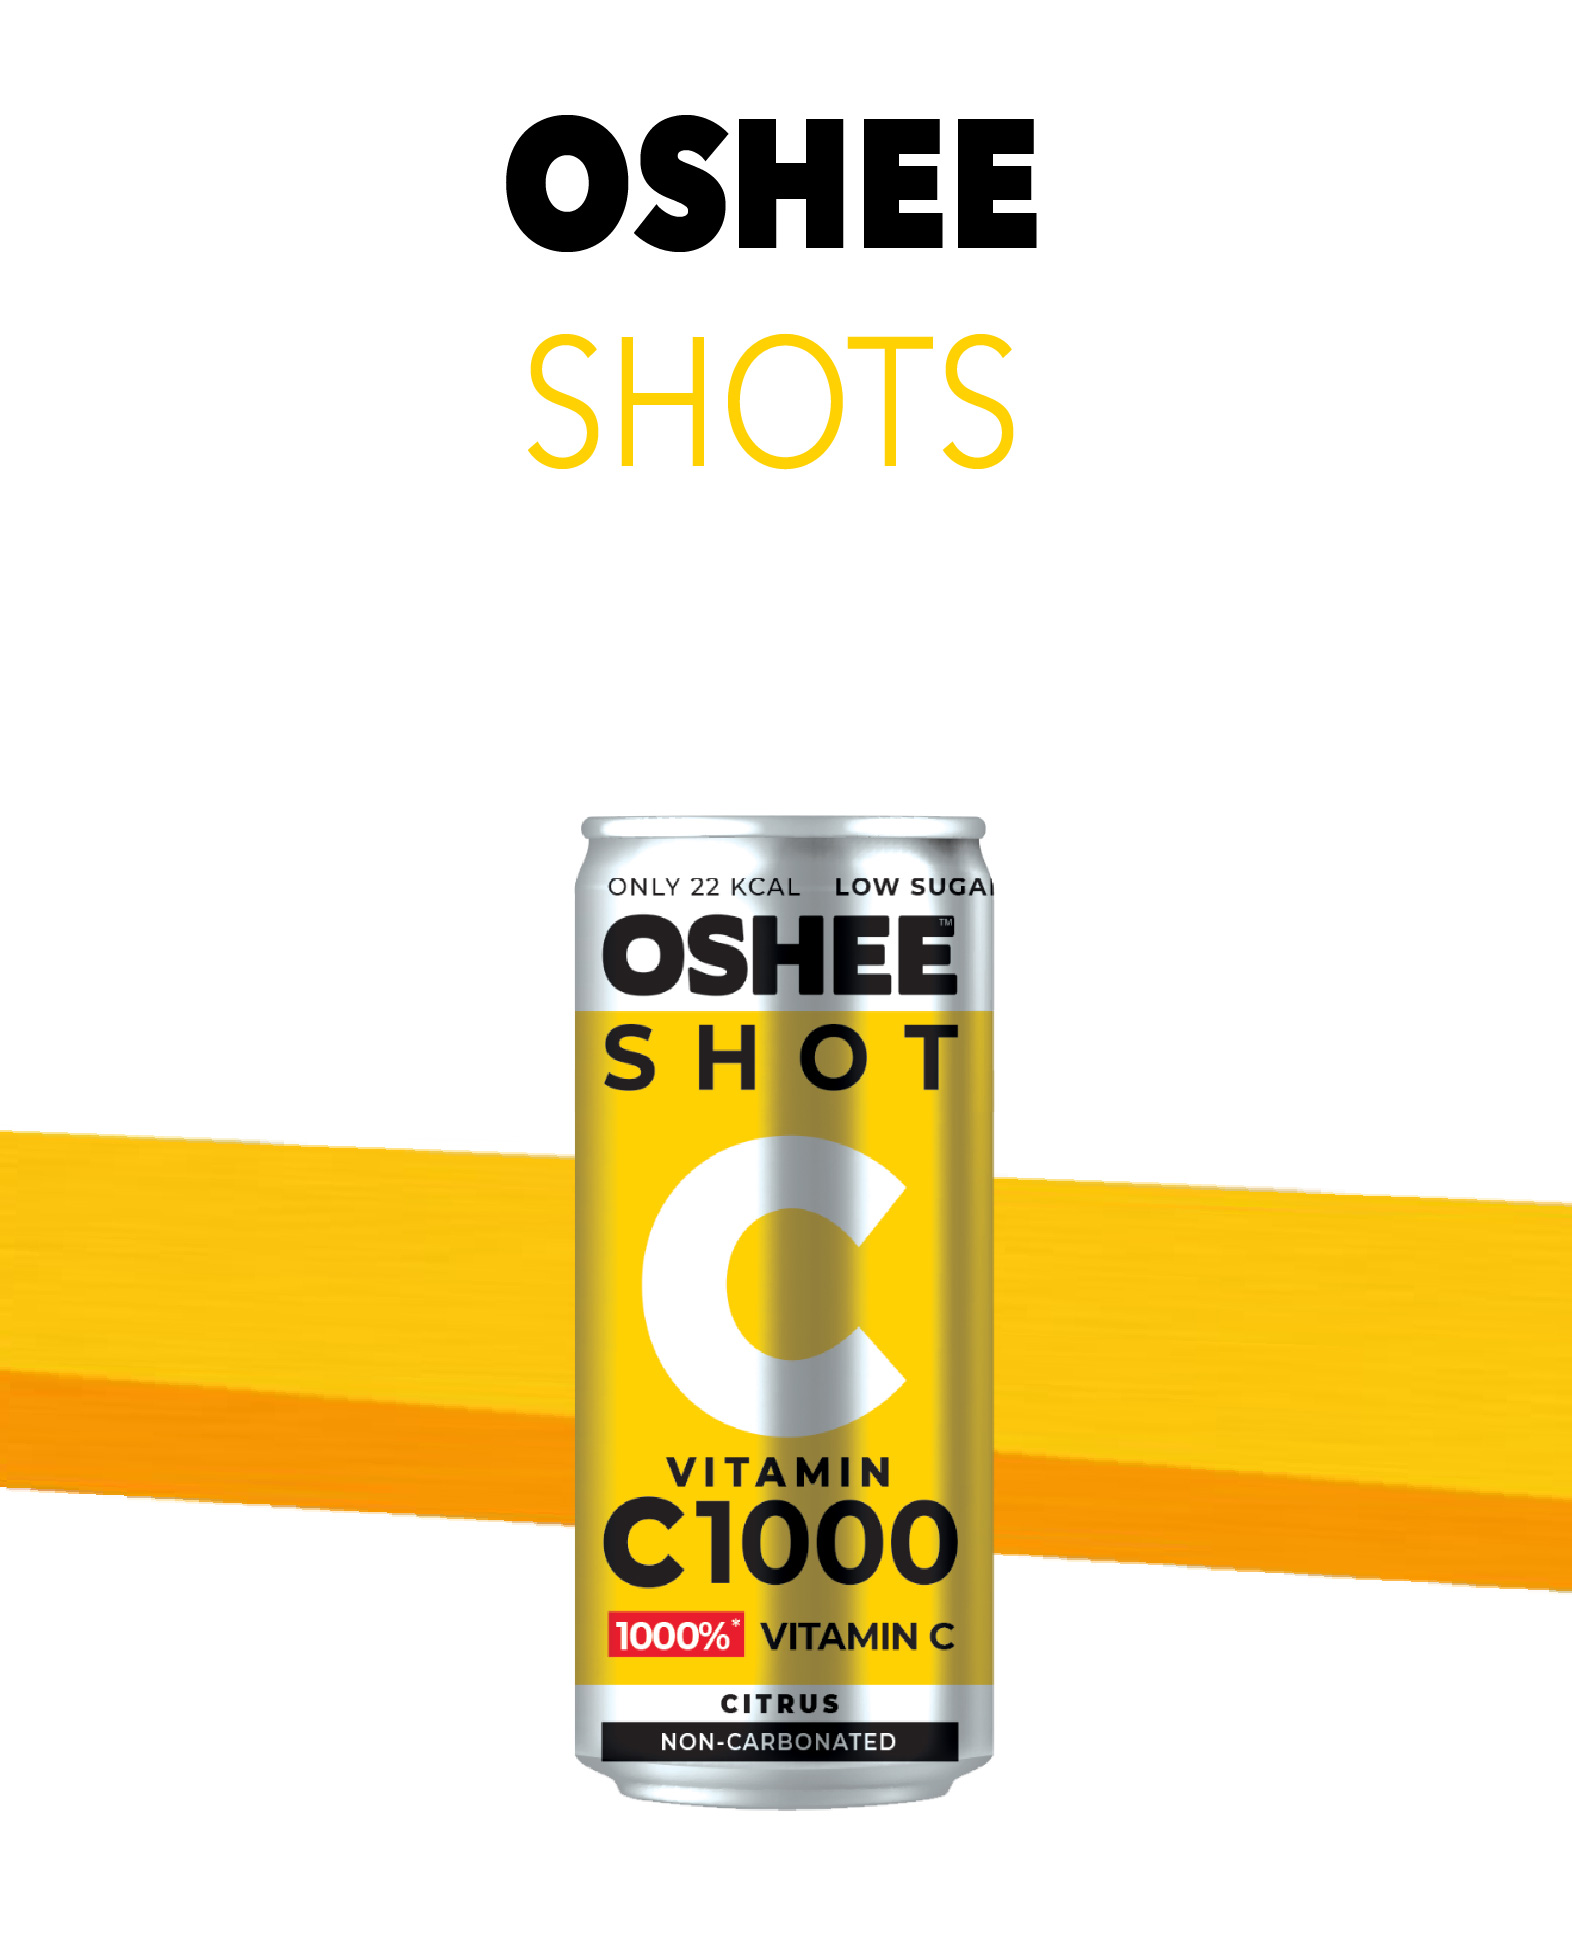 Oshee-you-are-oshee-shots